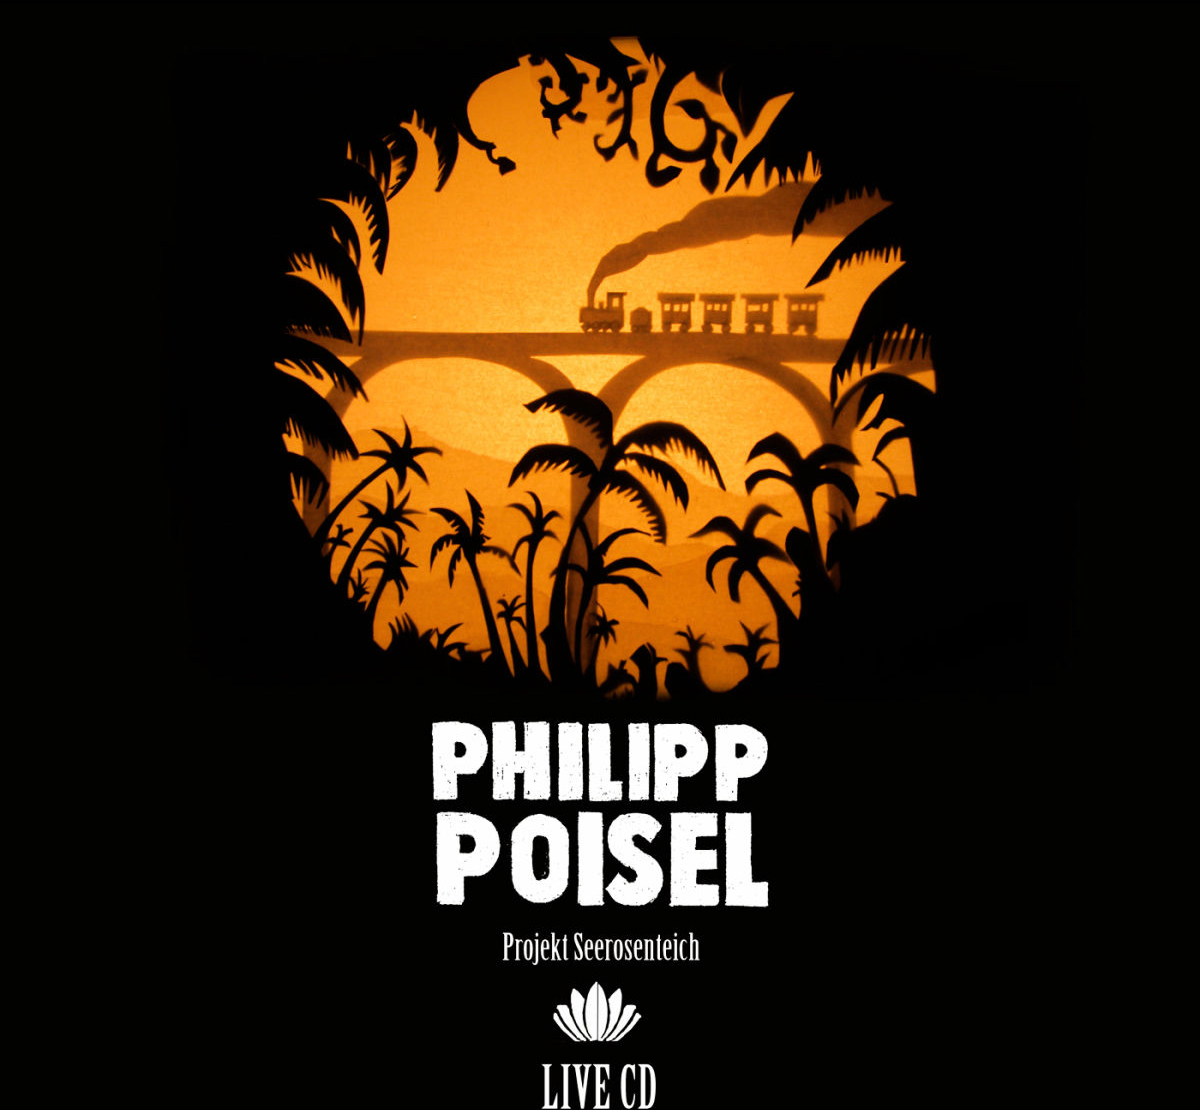 / Seerosenteich Projekt - + Buch) Limited) Premium Philipp Poisel - (Live (CD